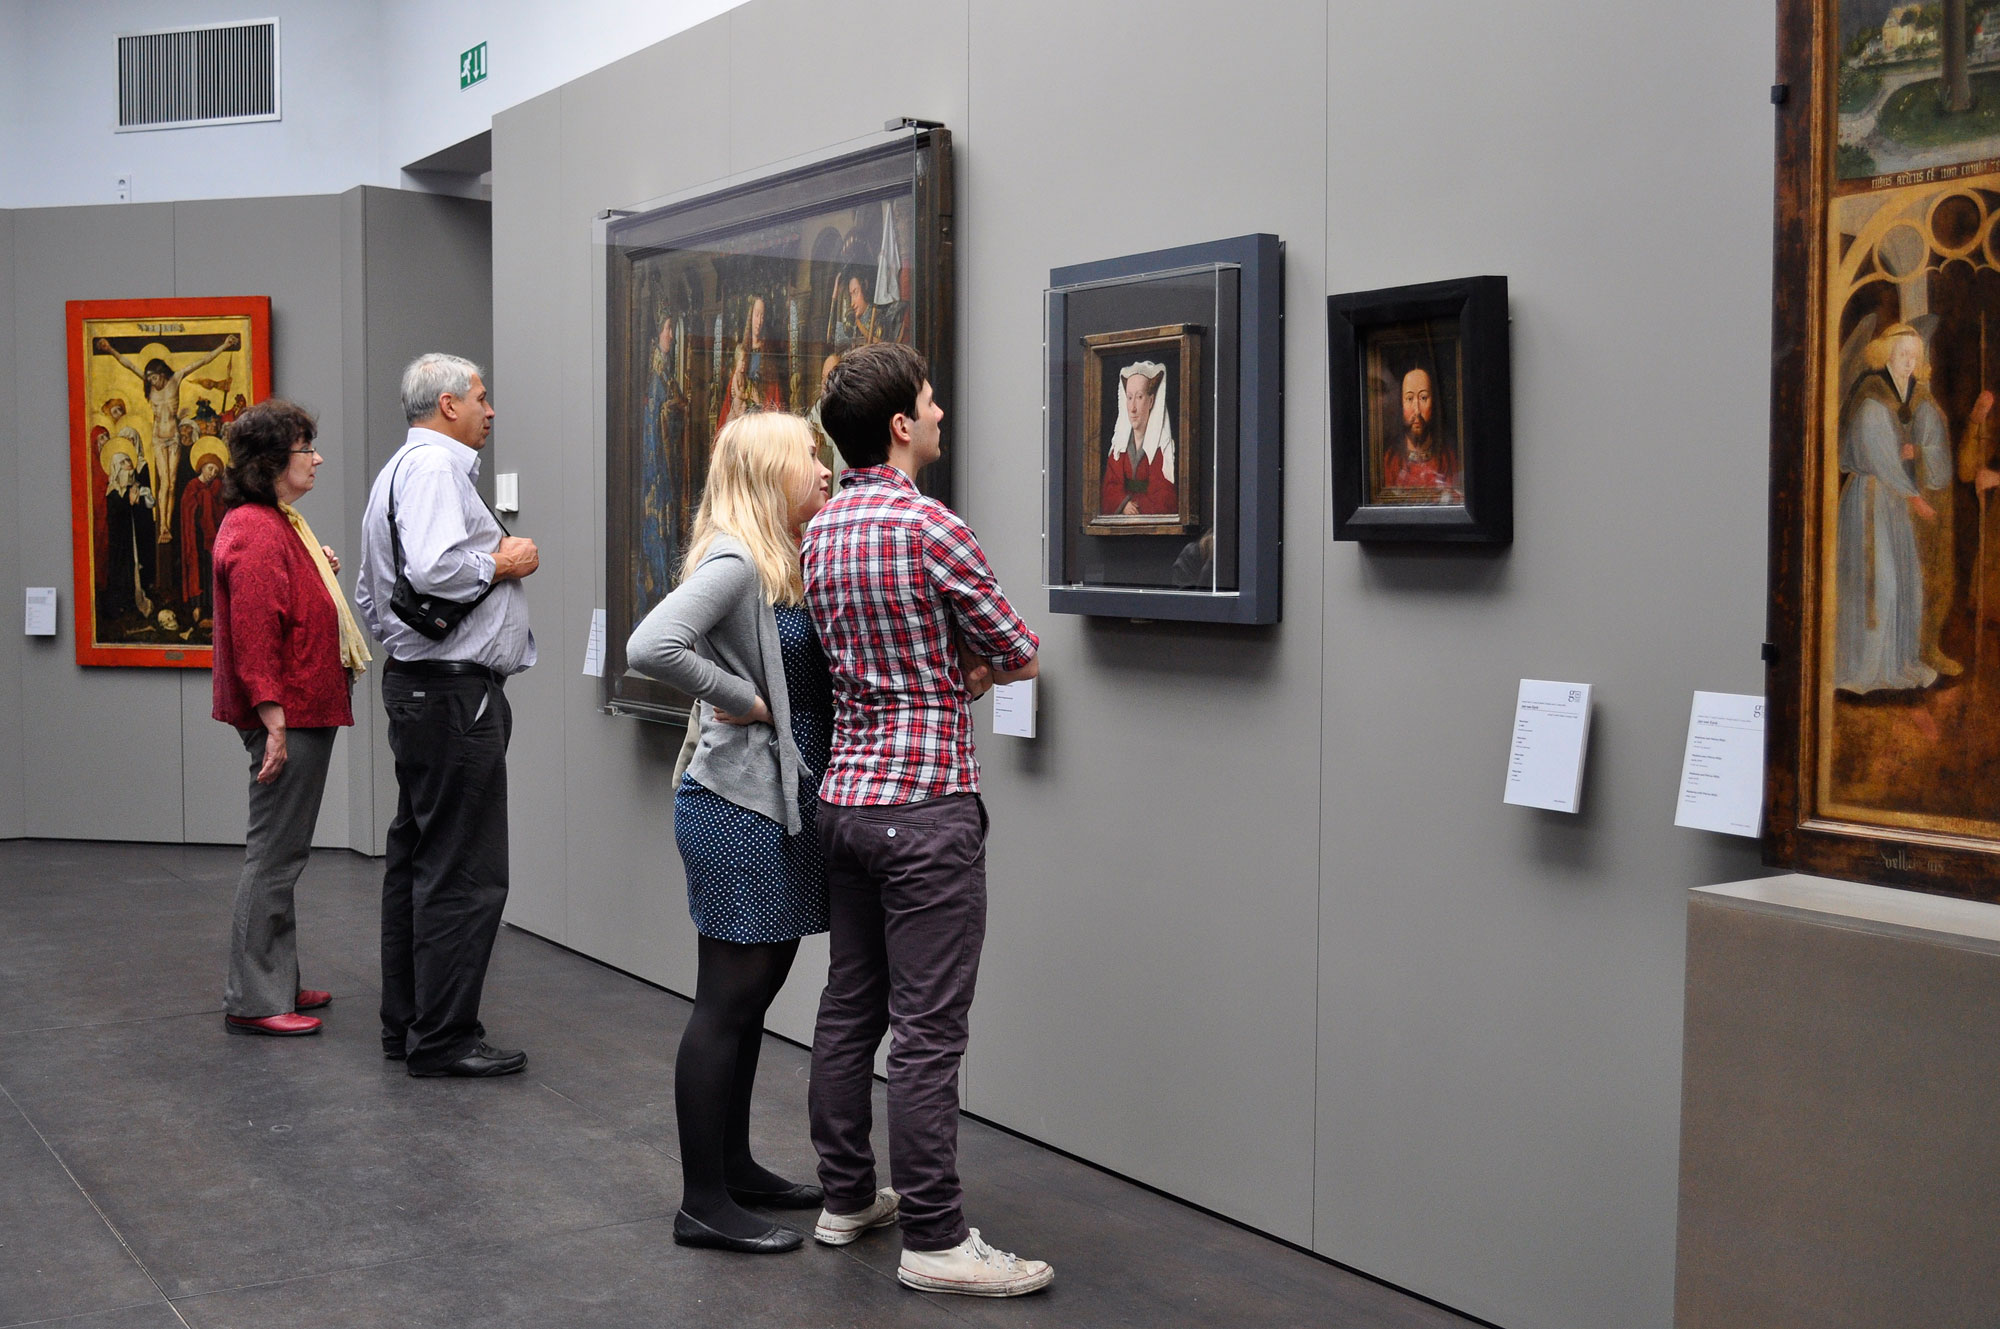 Van Eyck's works at the Groeninge Museum. Ph. Credit Sarah Bauwens